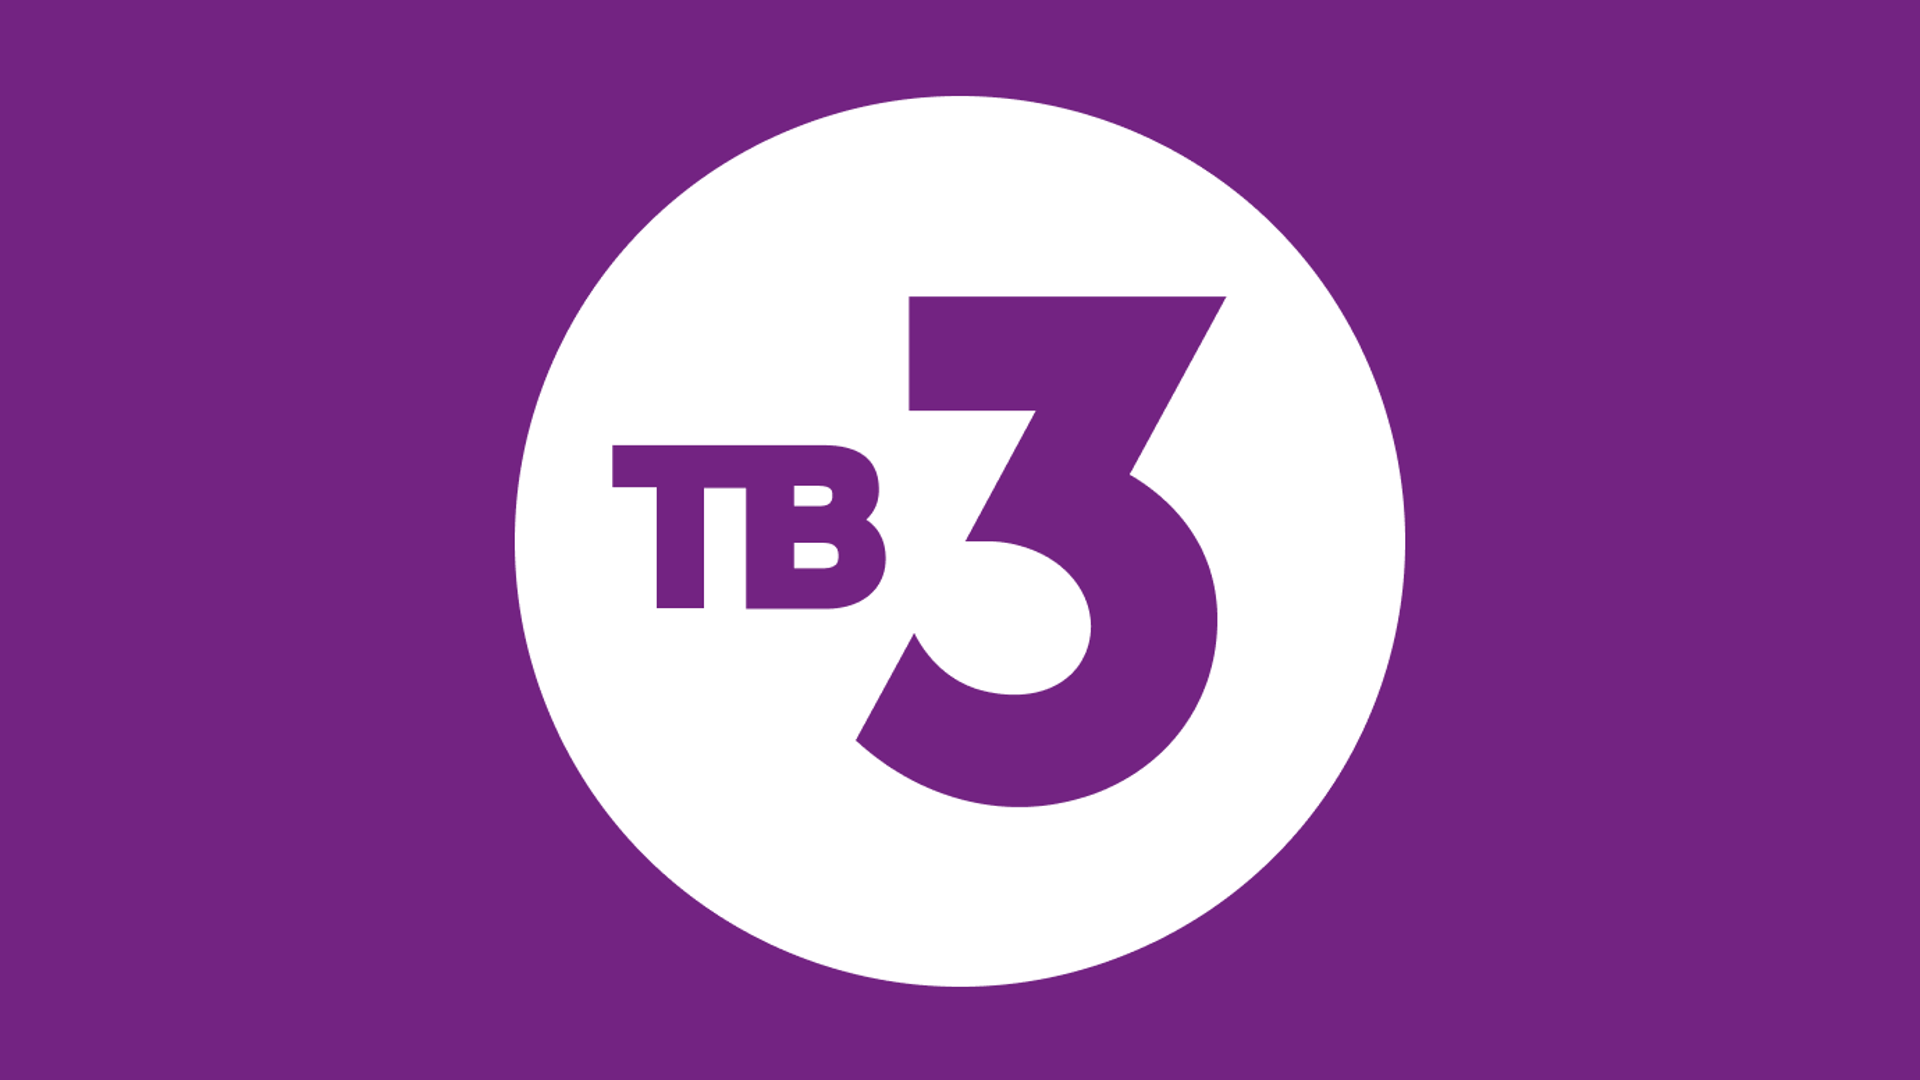 Tv 3 life. Тв3 Телеканал логотип. Канал тв3. ТВ 3 эмблема. Эмблема канала тв3.